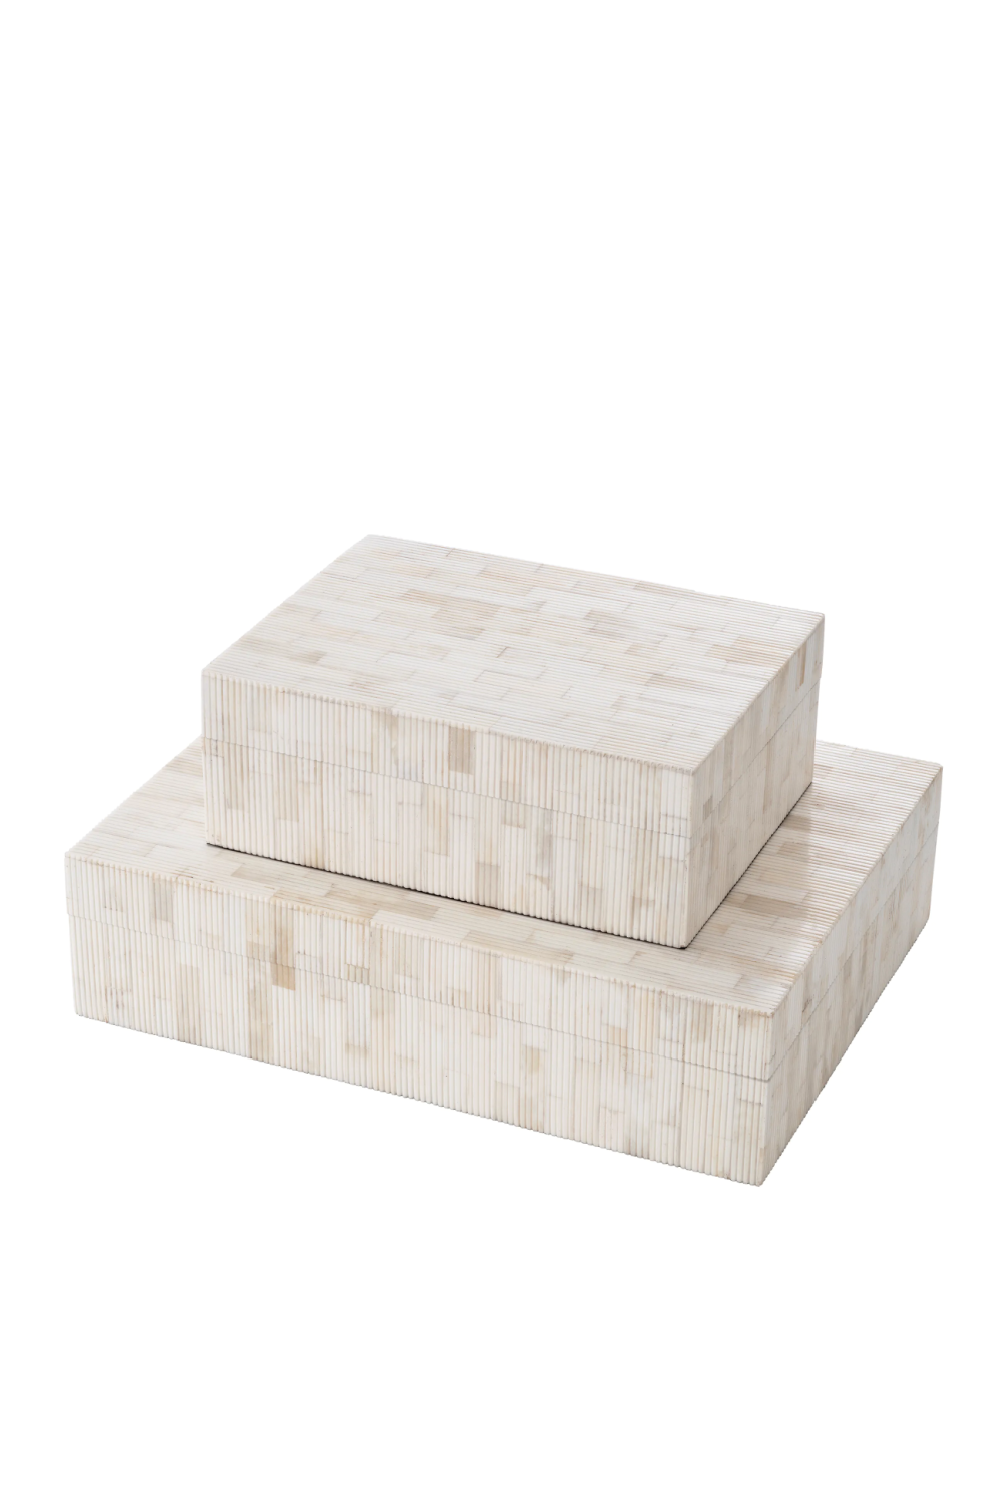 White Modern Box | Eichholtz Scoop | Oroa.com